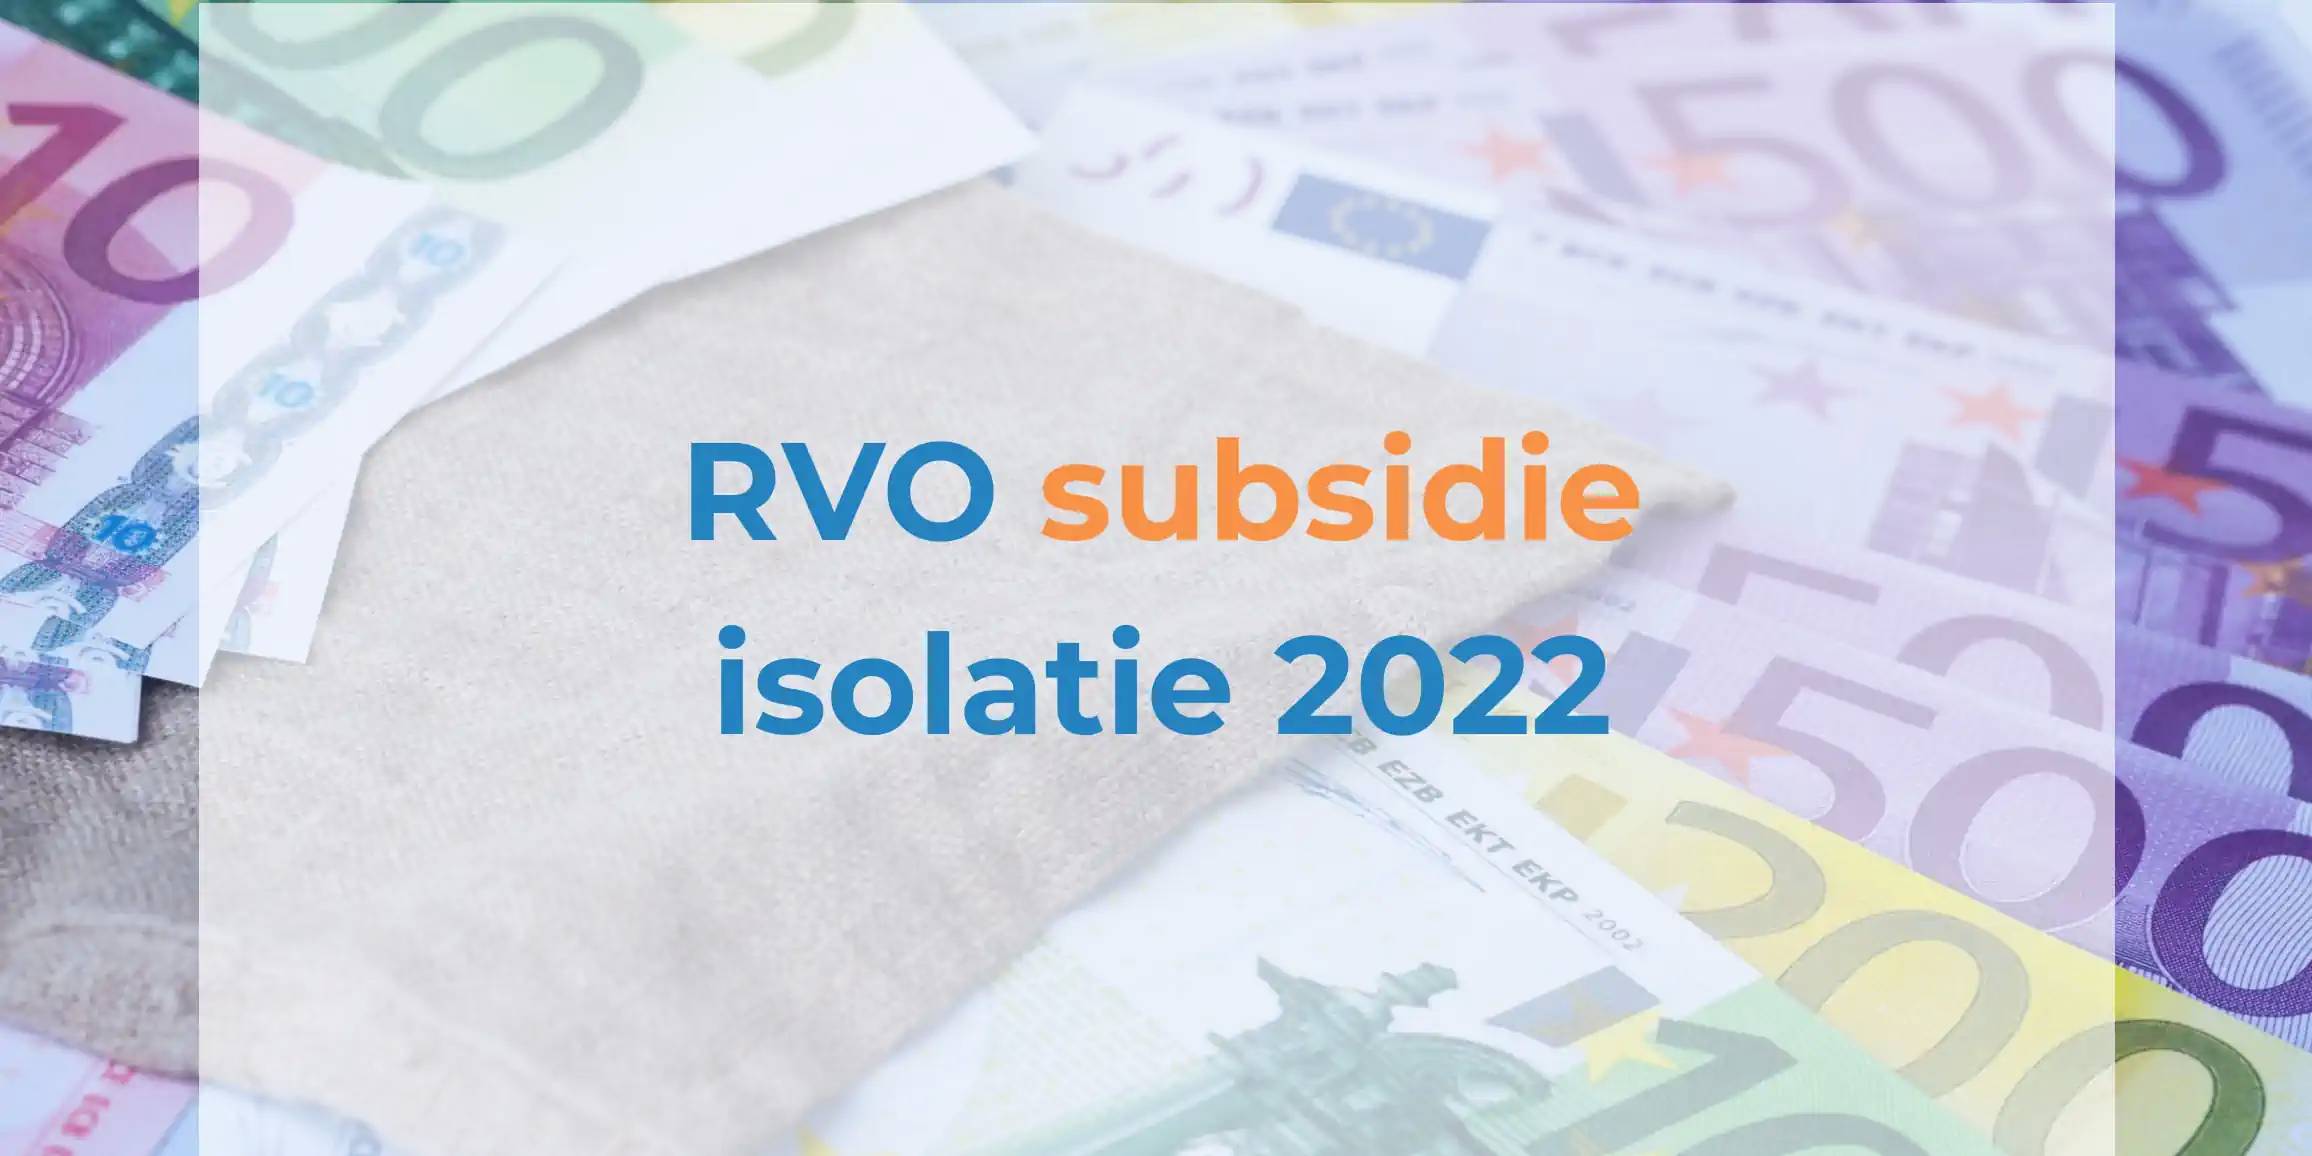 RVO subsidie isolatie 2022 - gratis stappenplan